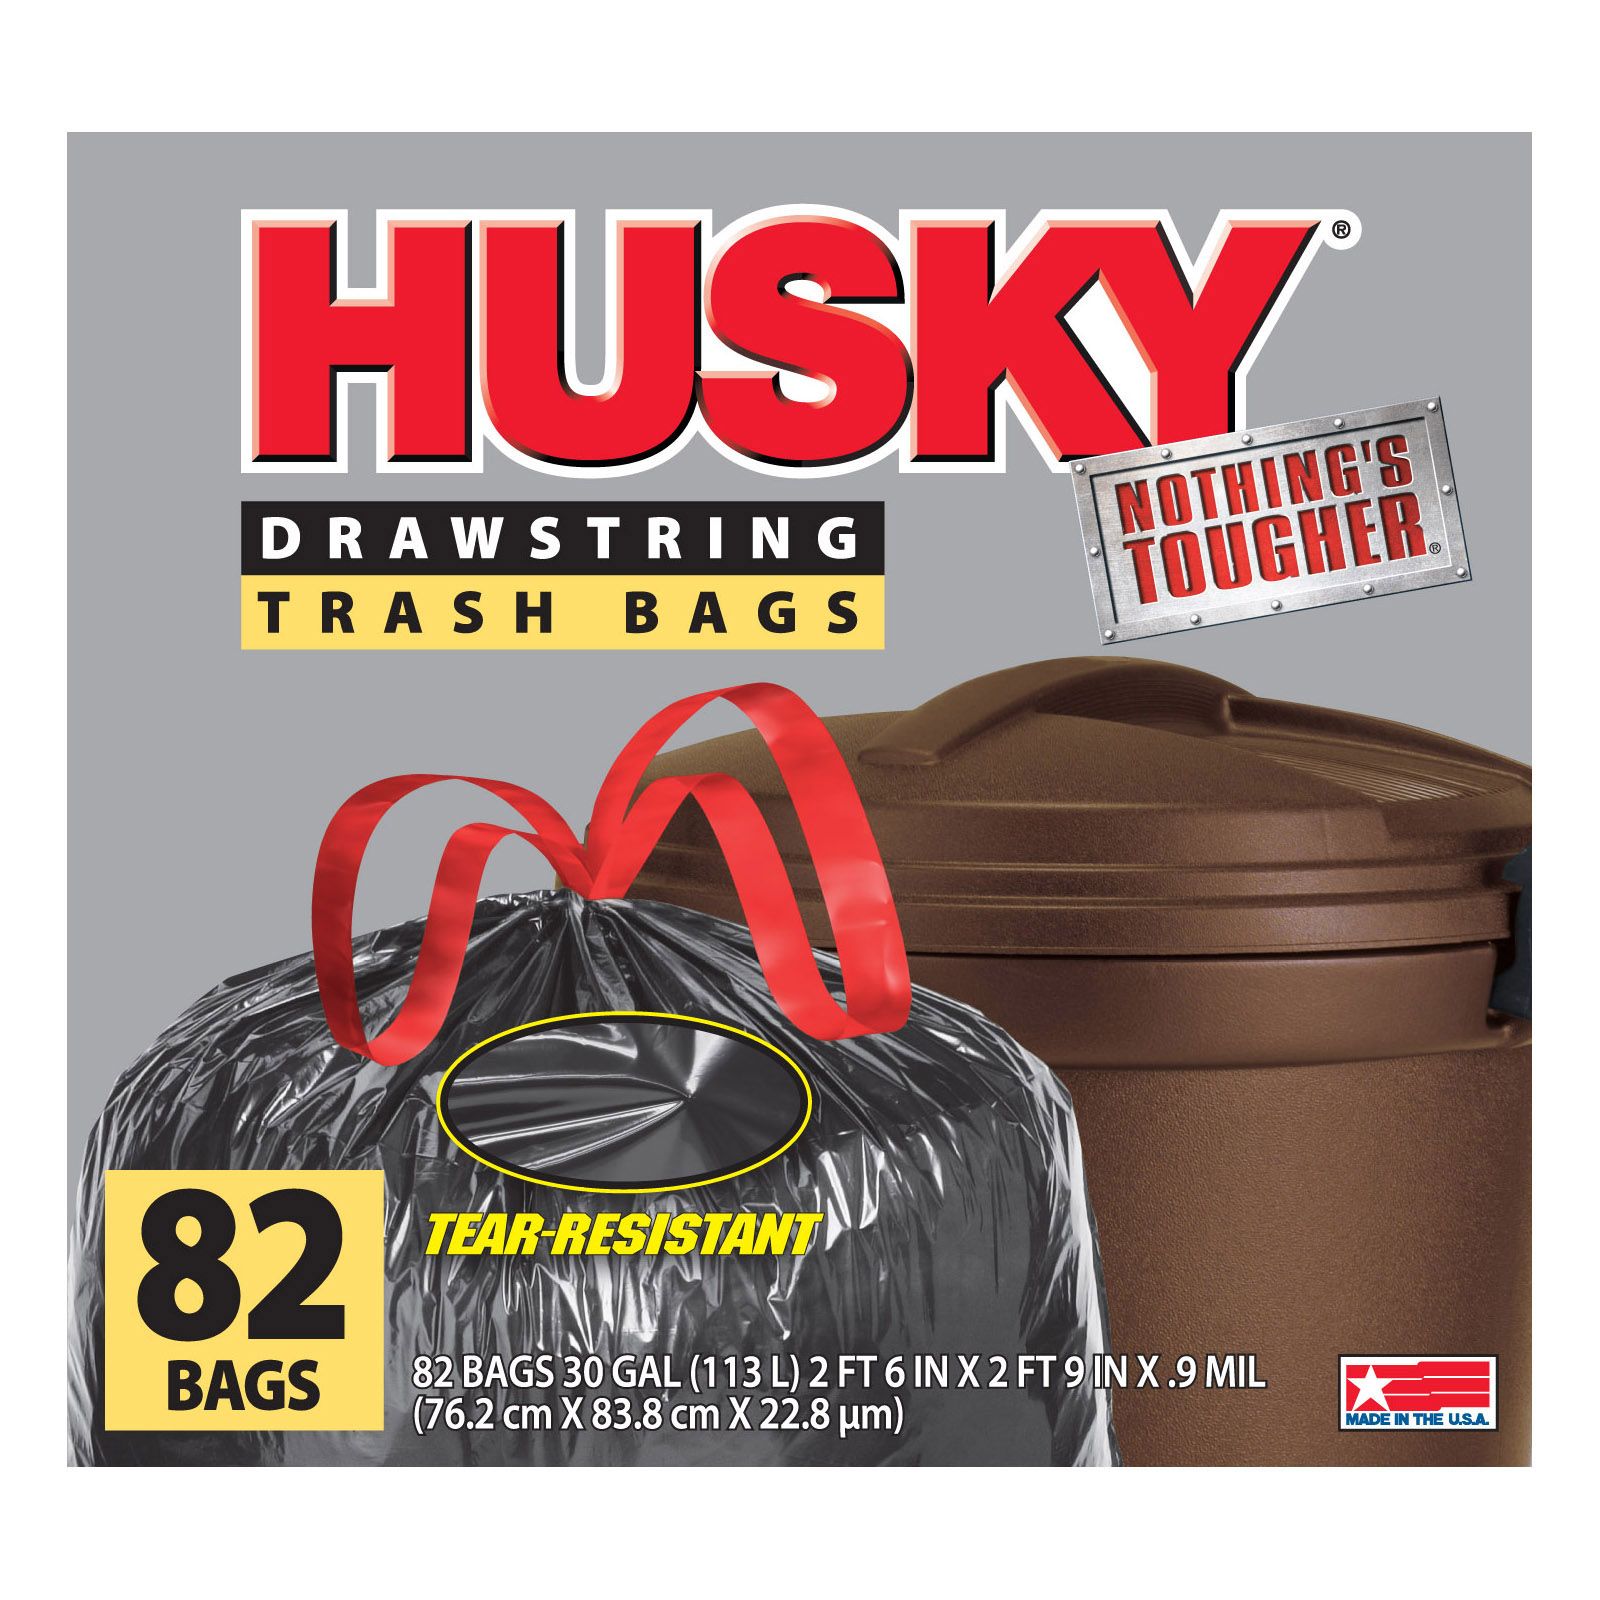  Reli. 39 Gallon Trash Bags Drawstring (200 Count Bulk